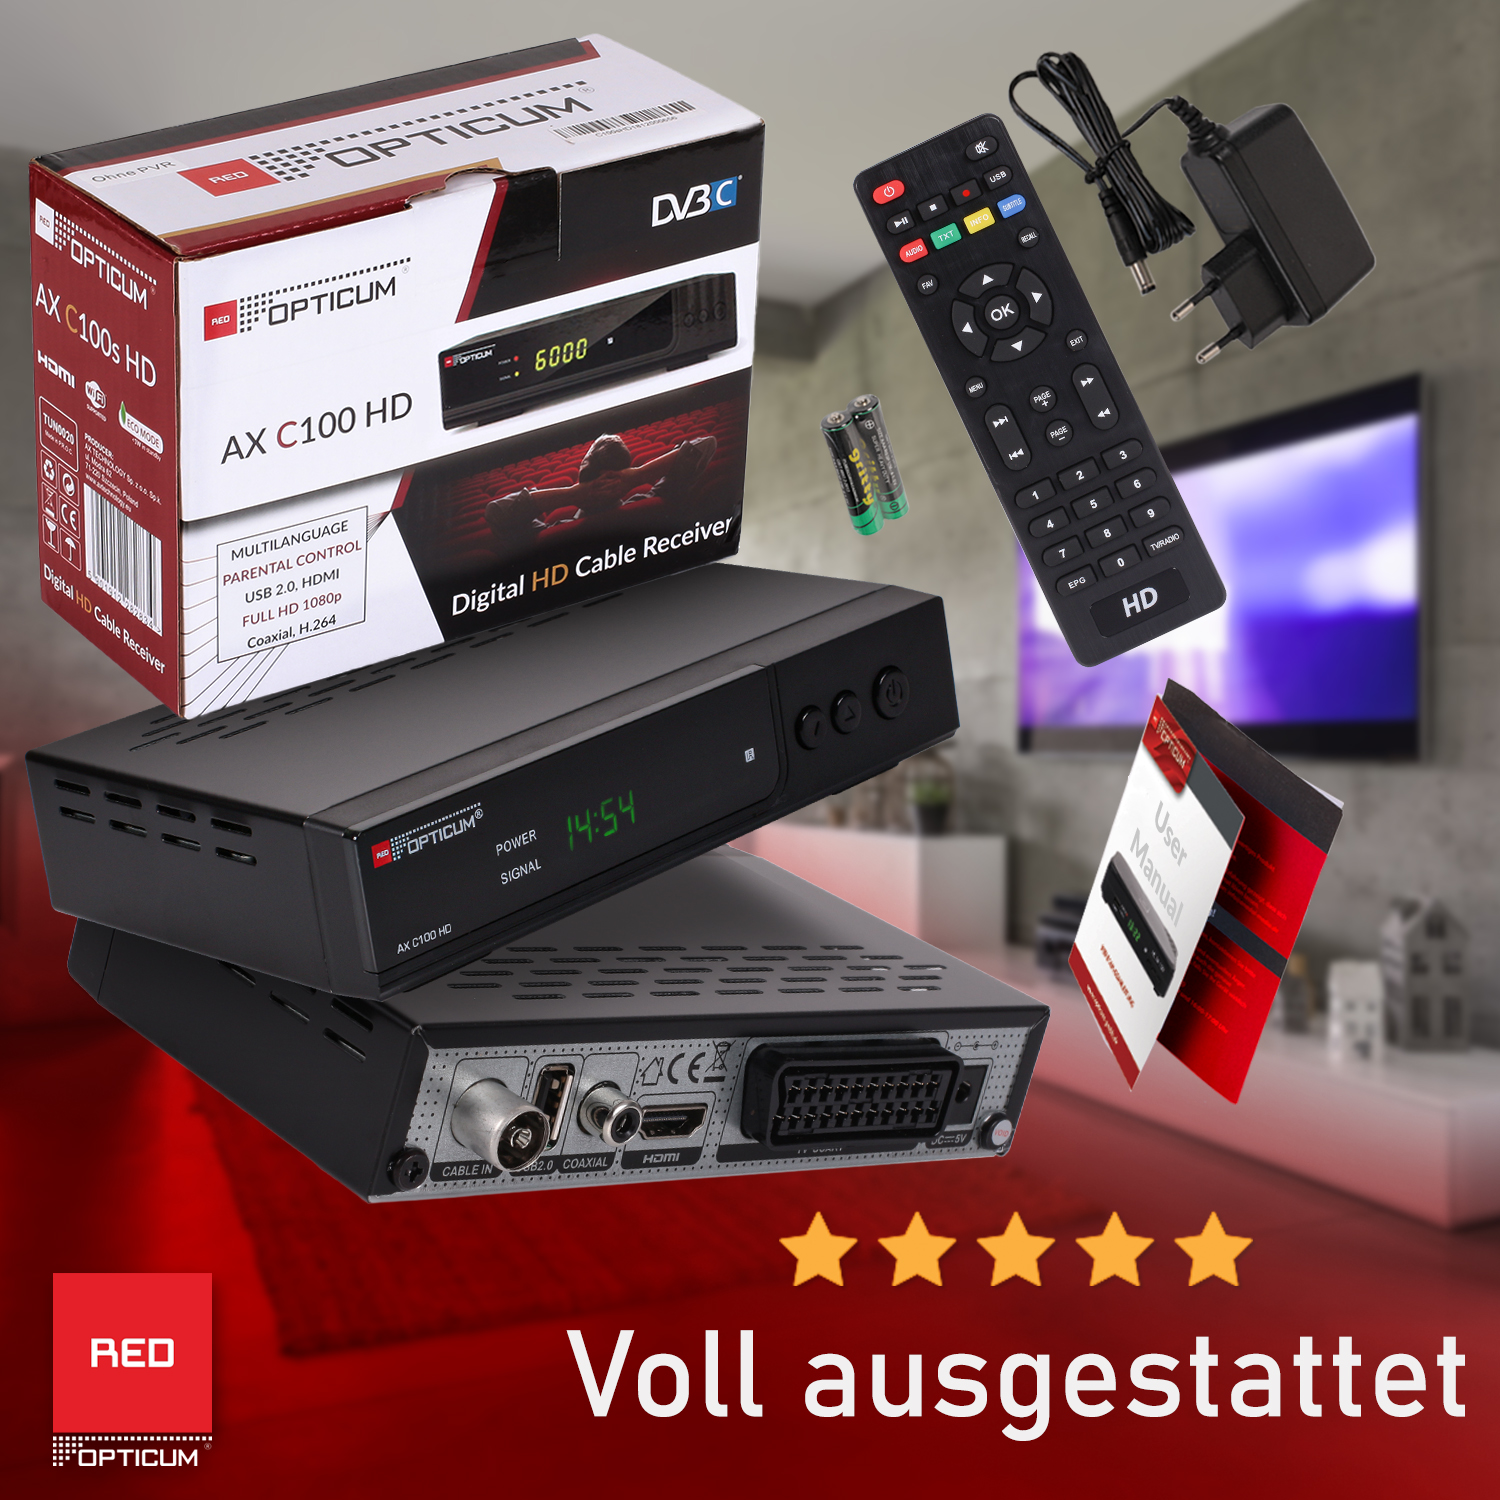 C100 HD AX OPTICUM DVB-C2, DVB-C, RED schwarz) DVB-C Receiver (HDTV,